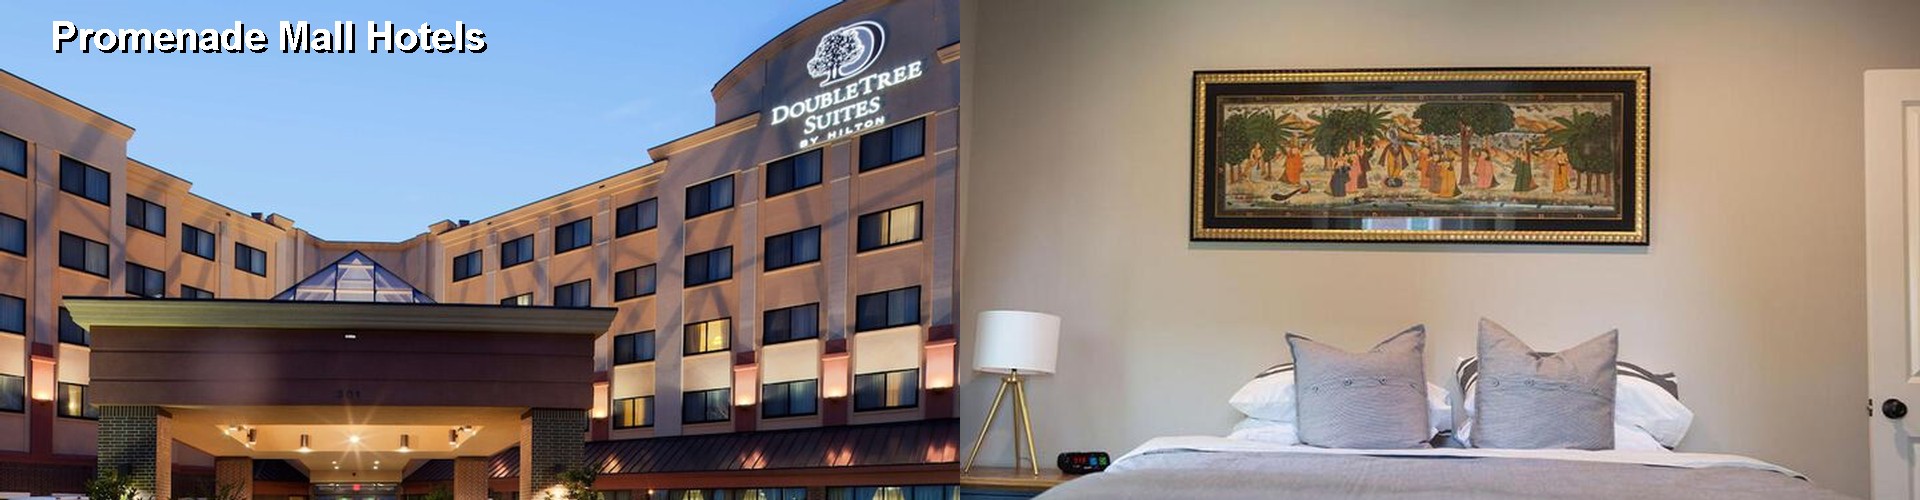 5 Best Hotels near Promenade Mall